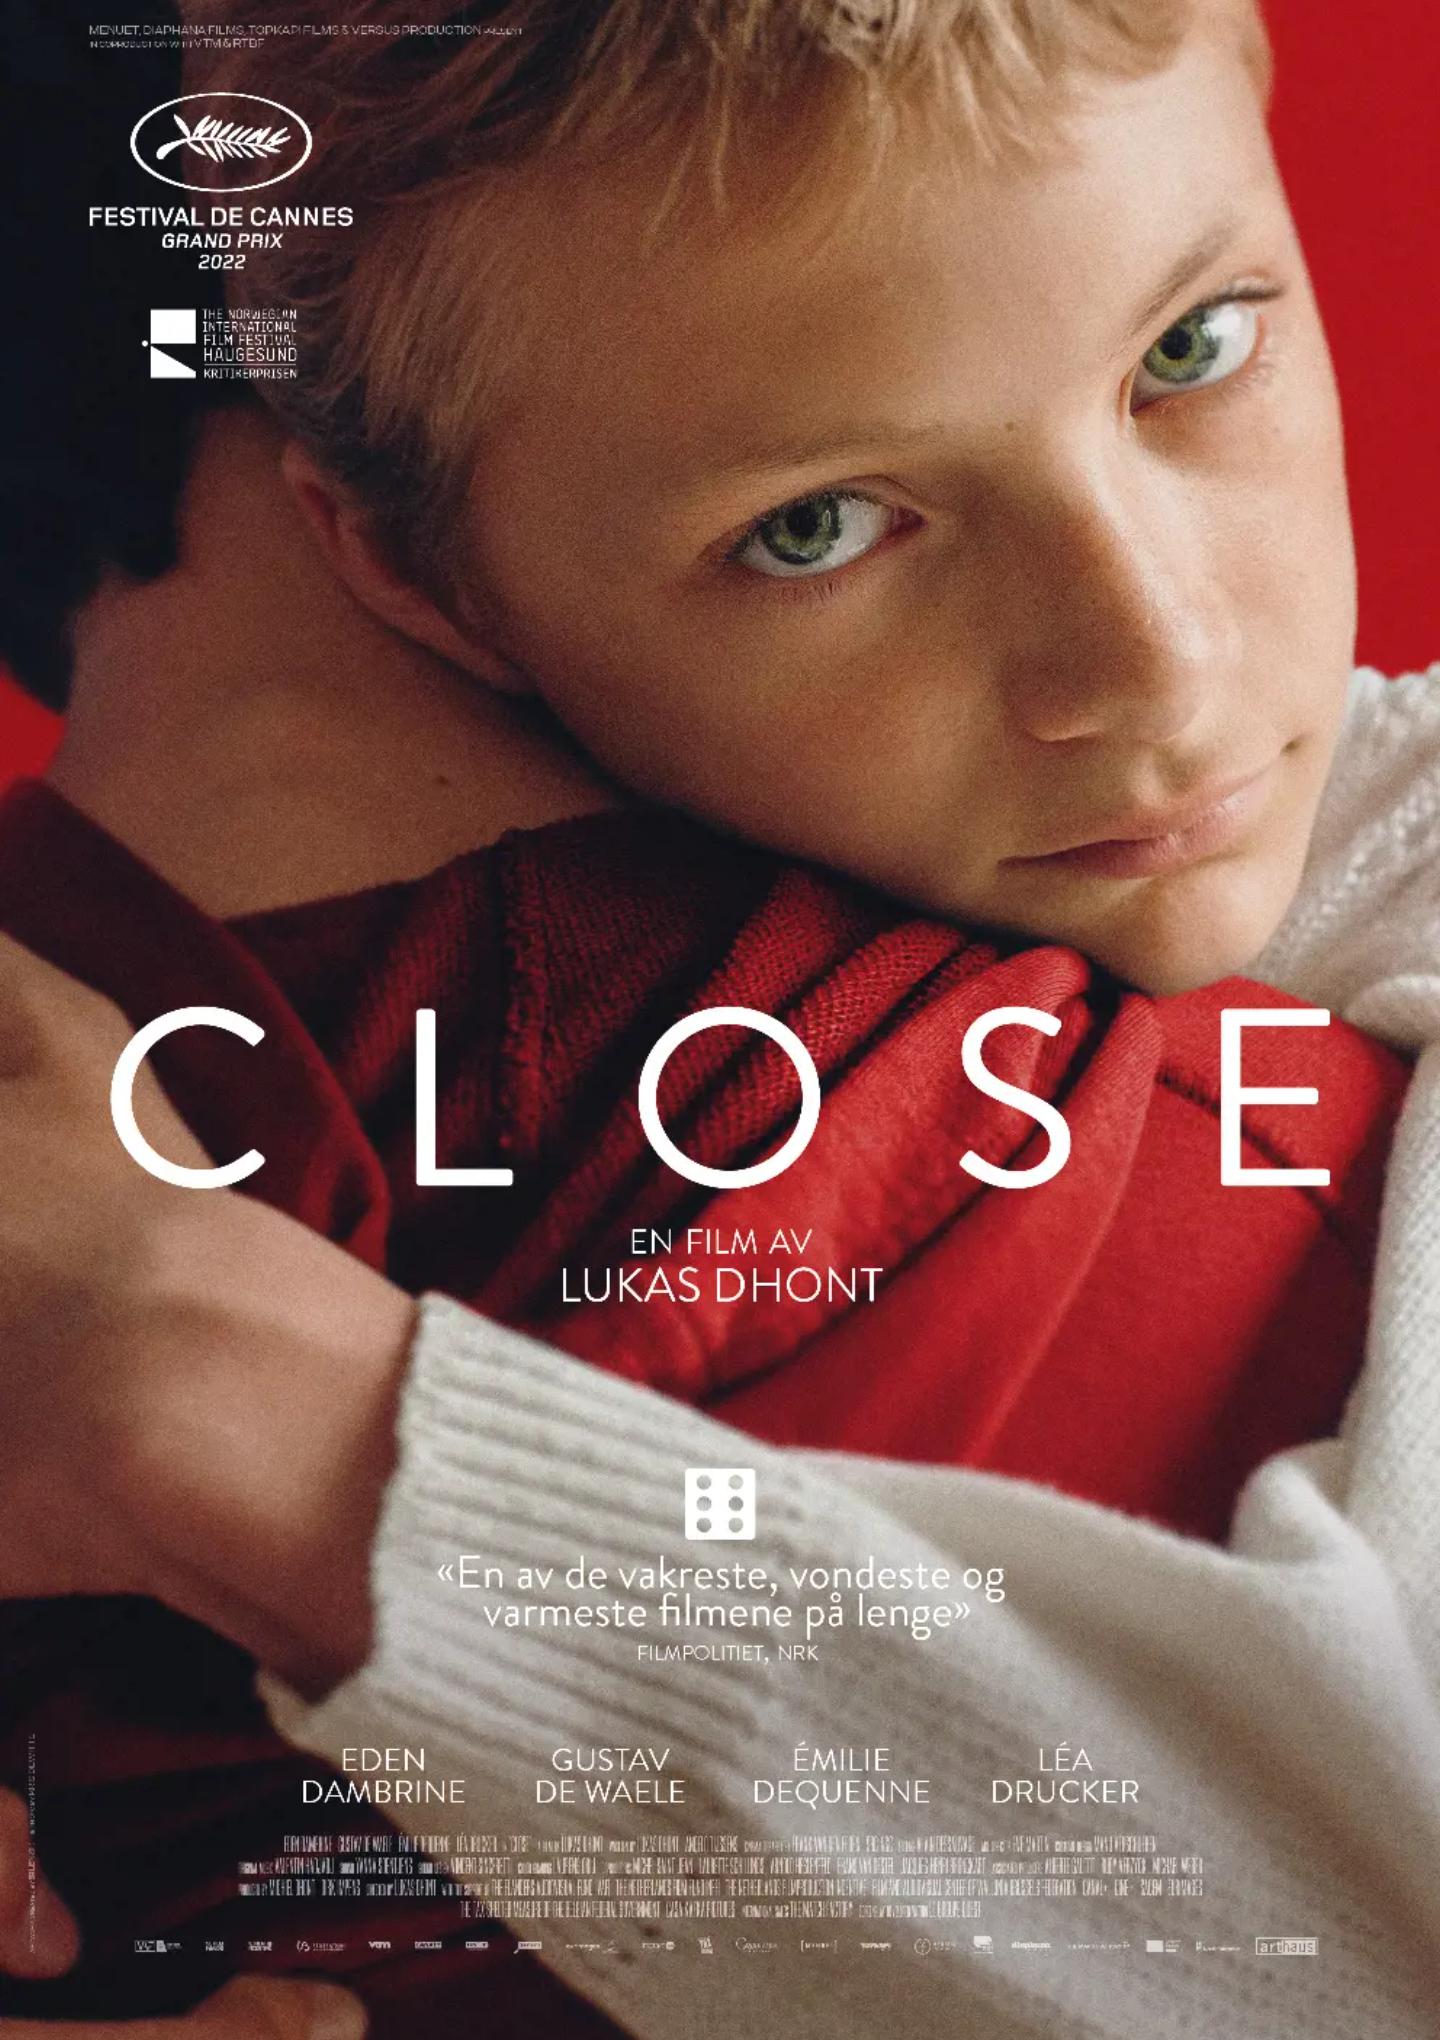 Plakat for 'Close'